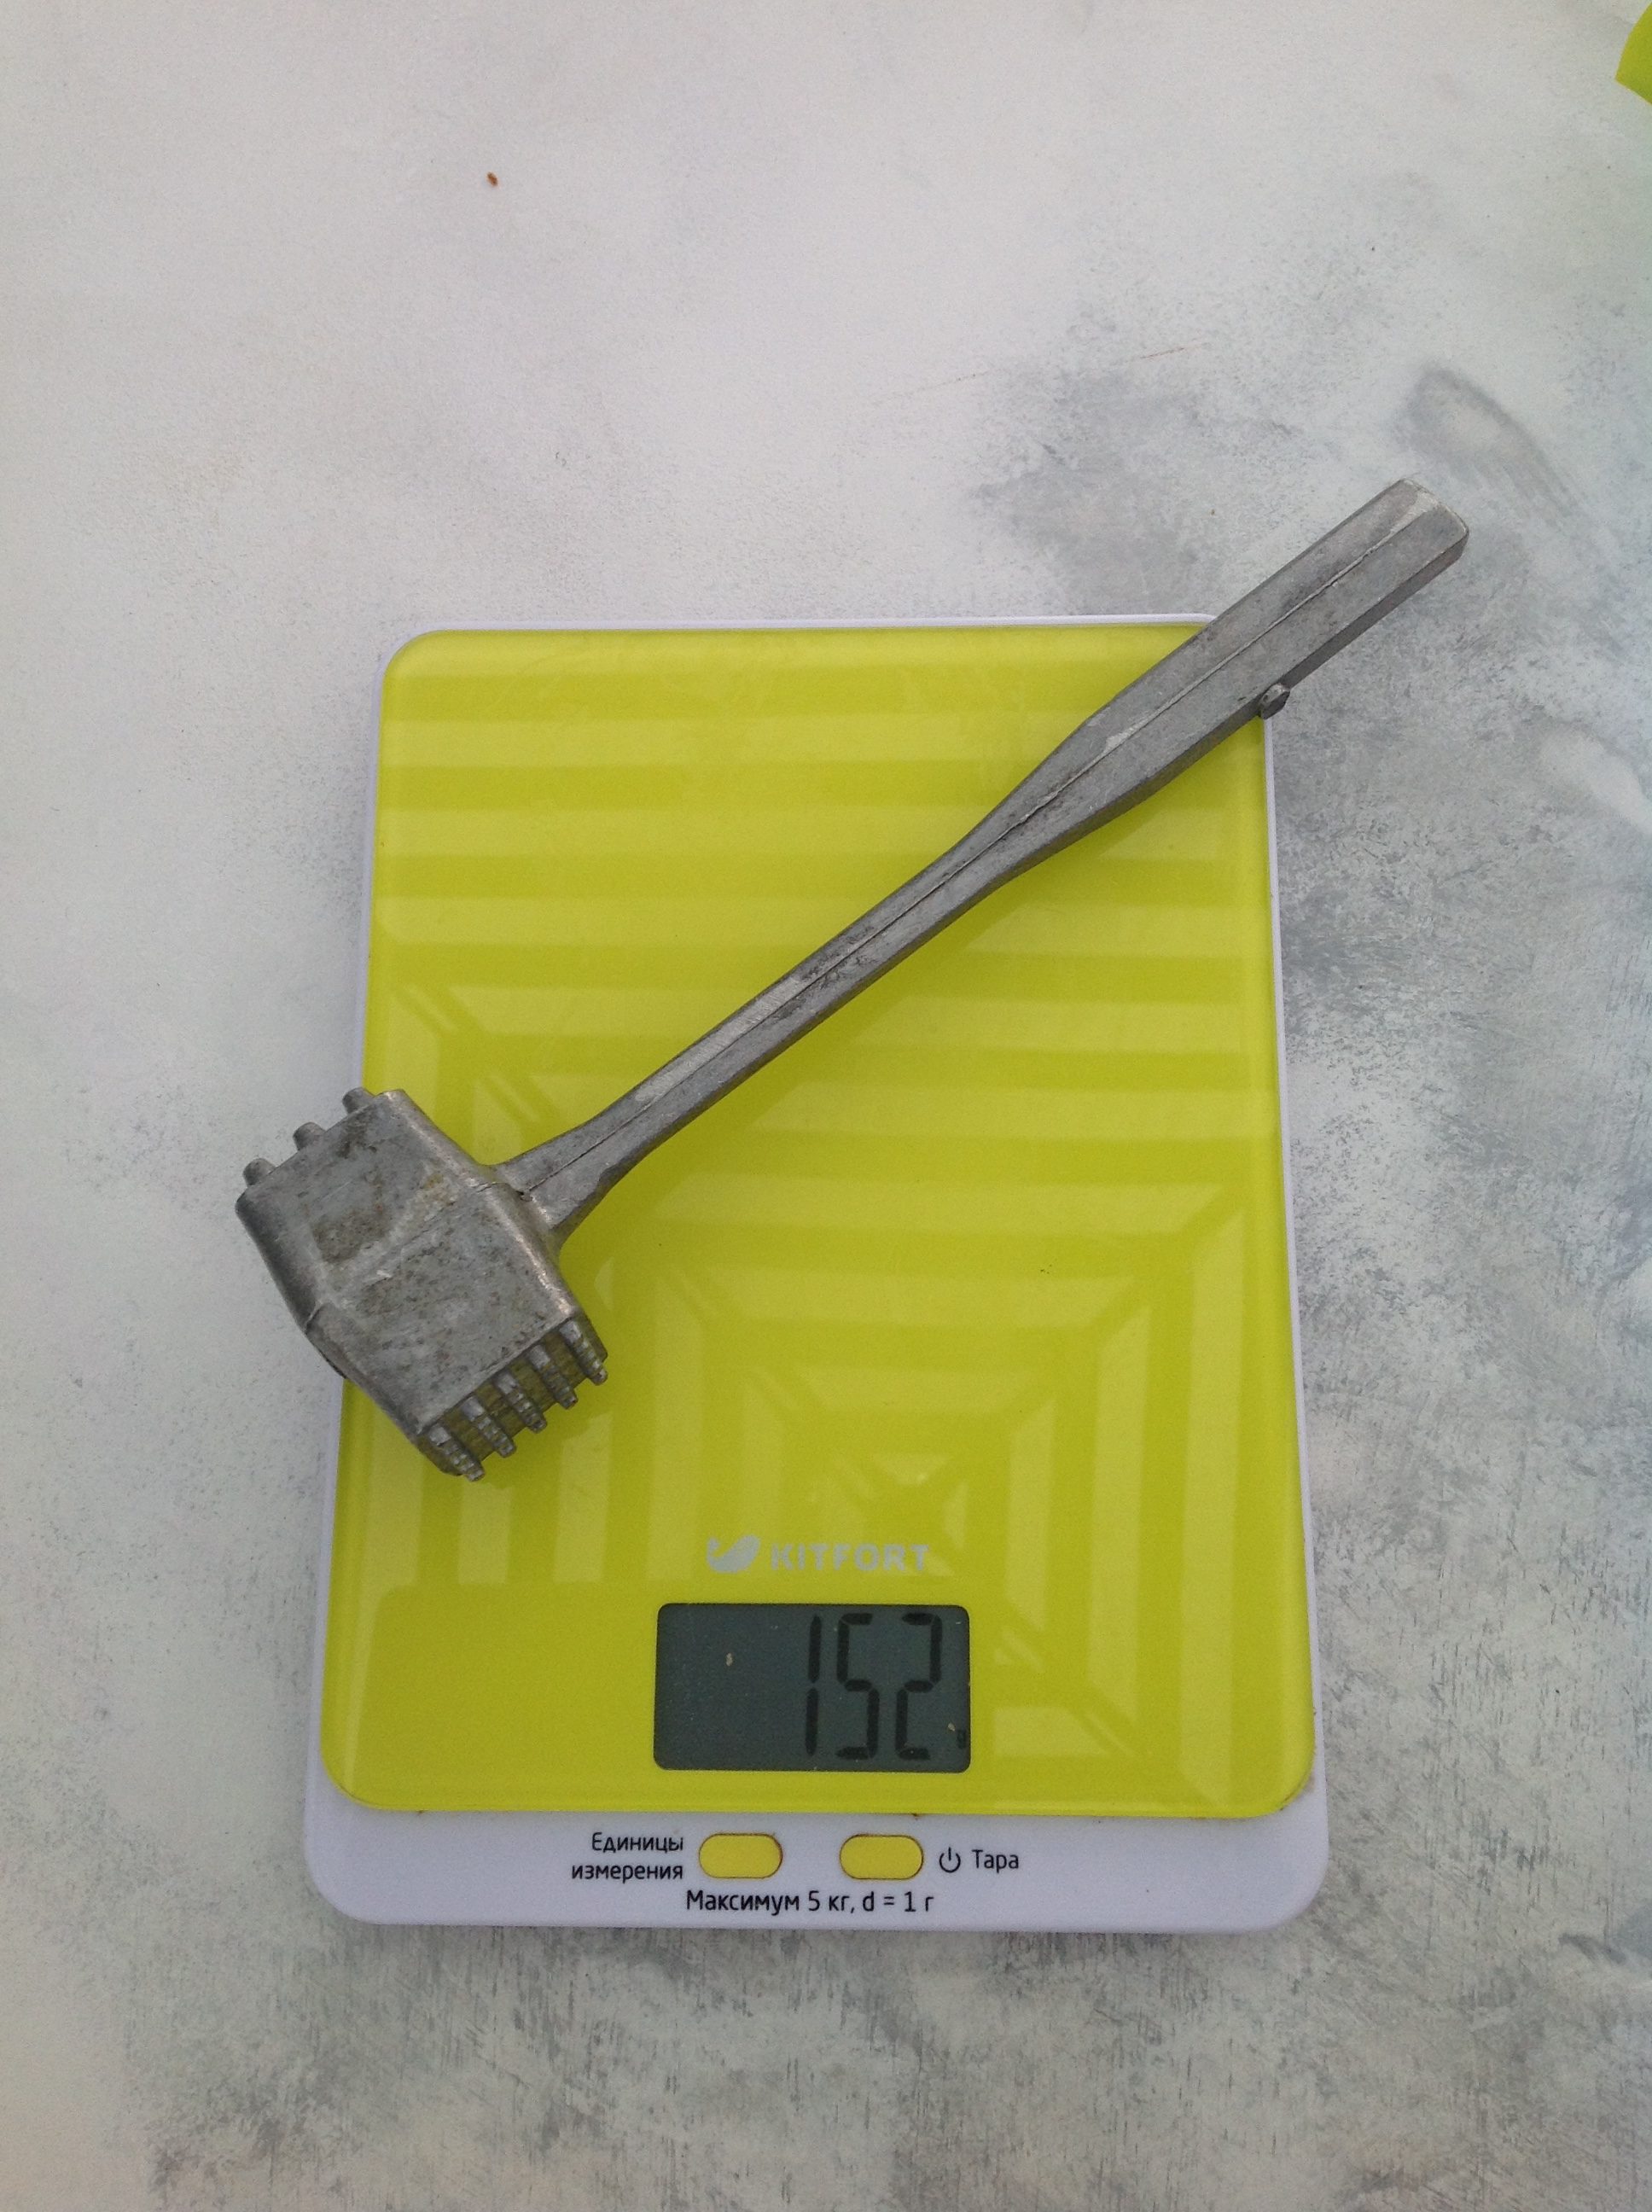 How much does an aluminum mallet weigh?